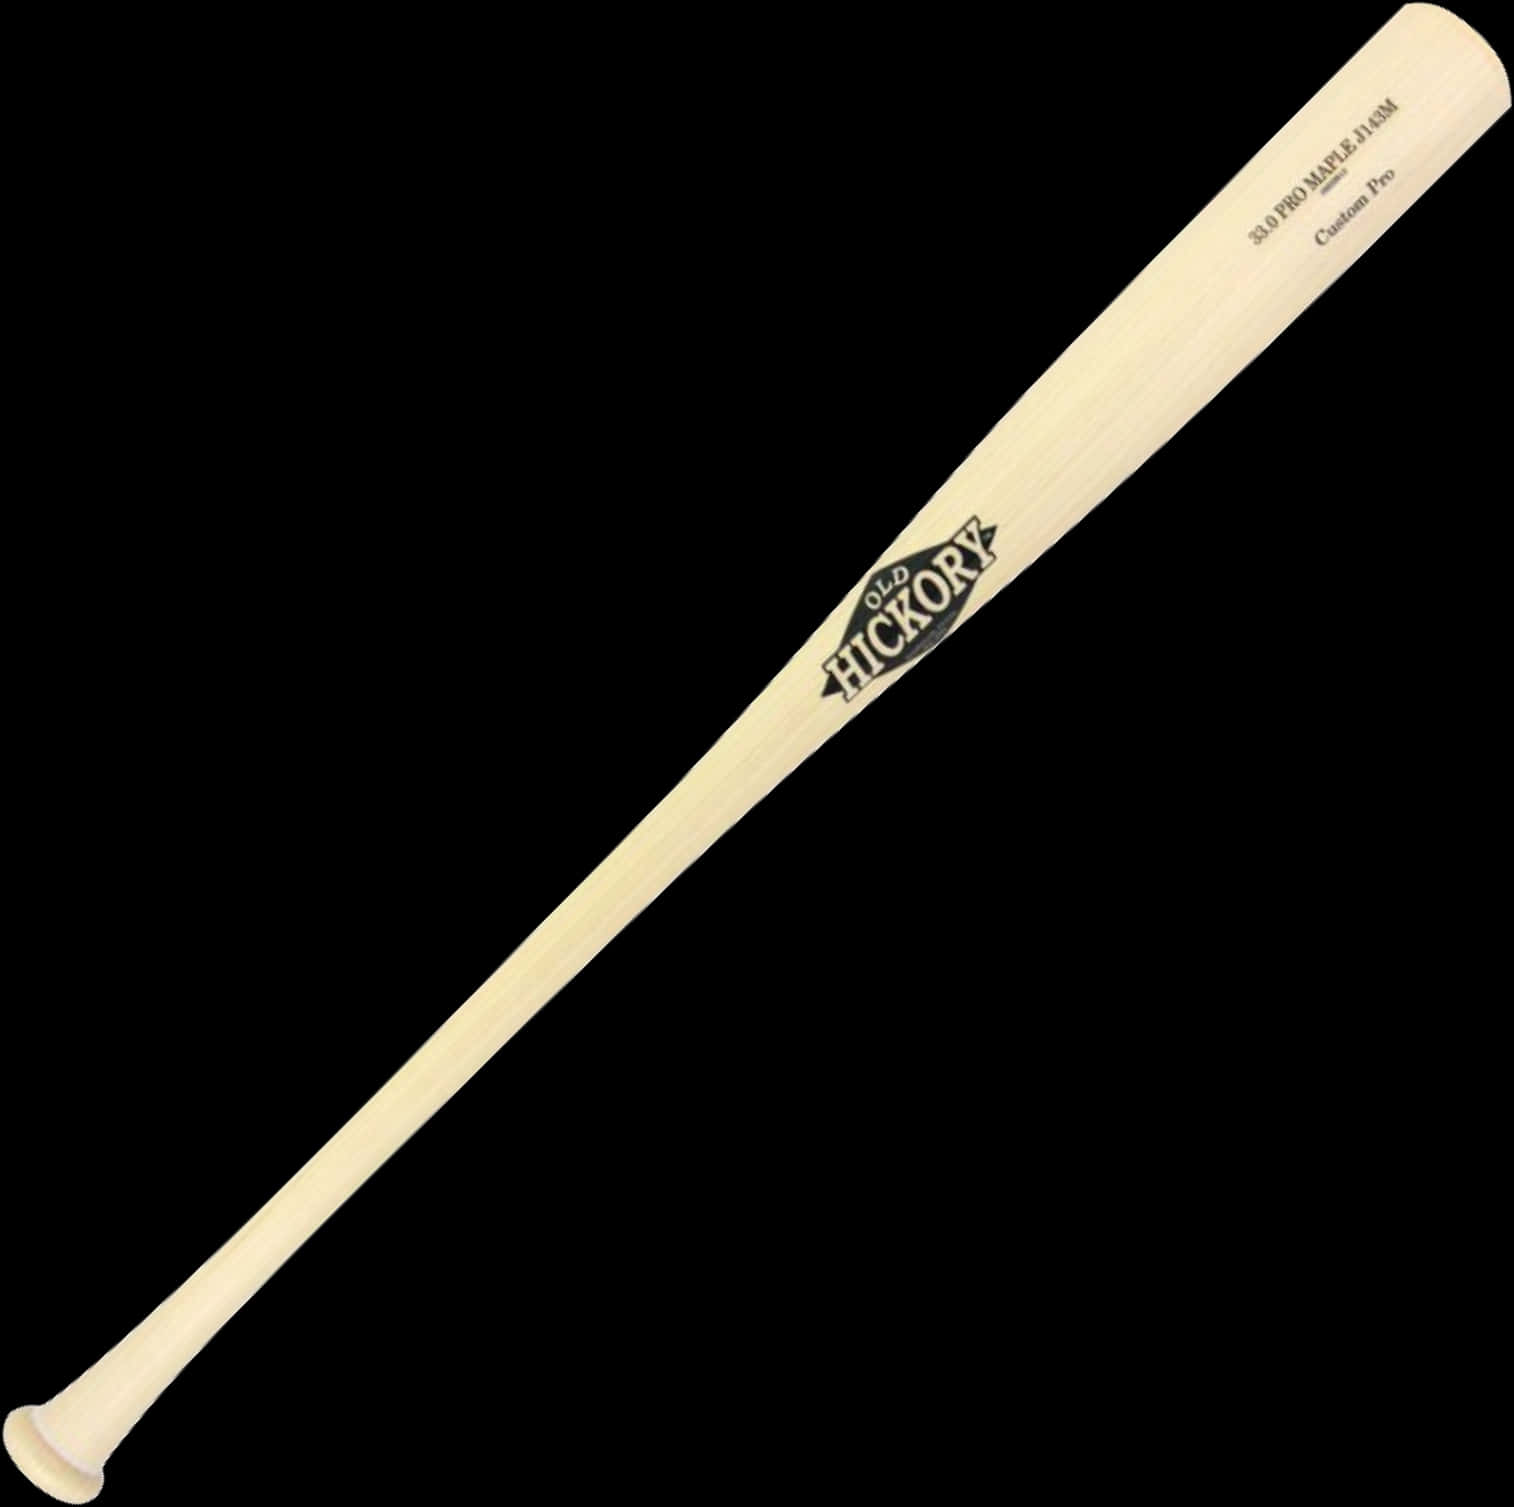 A Baseball Bat On A Black Background